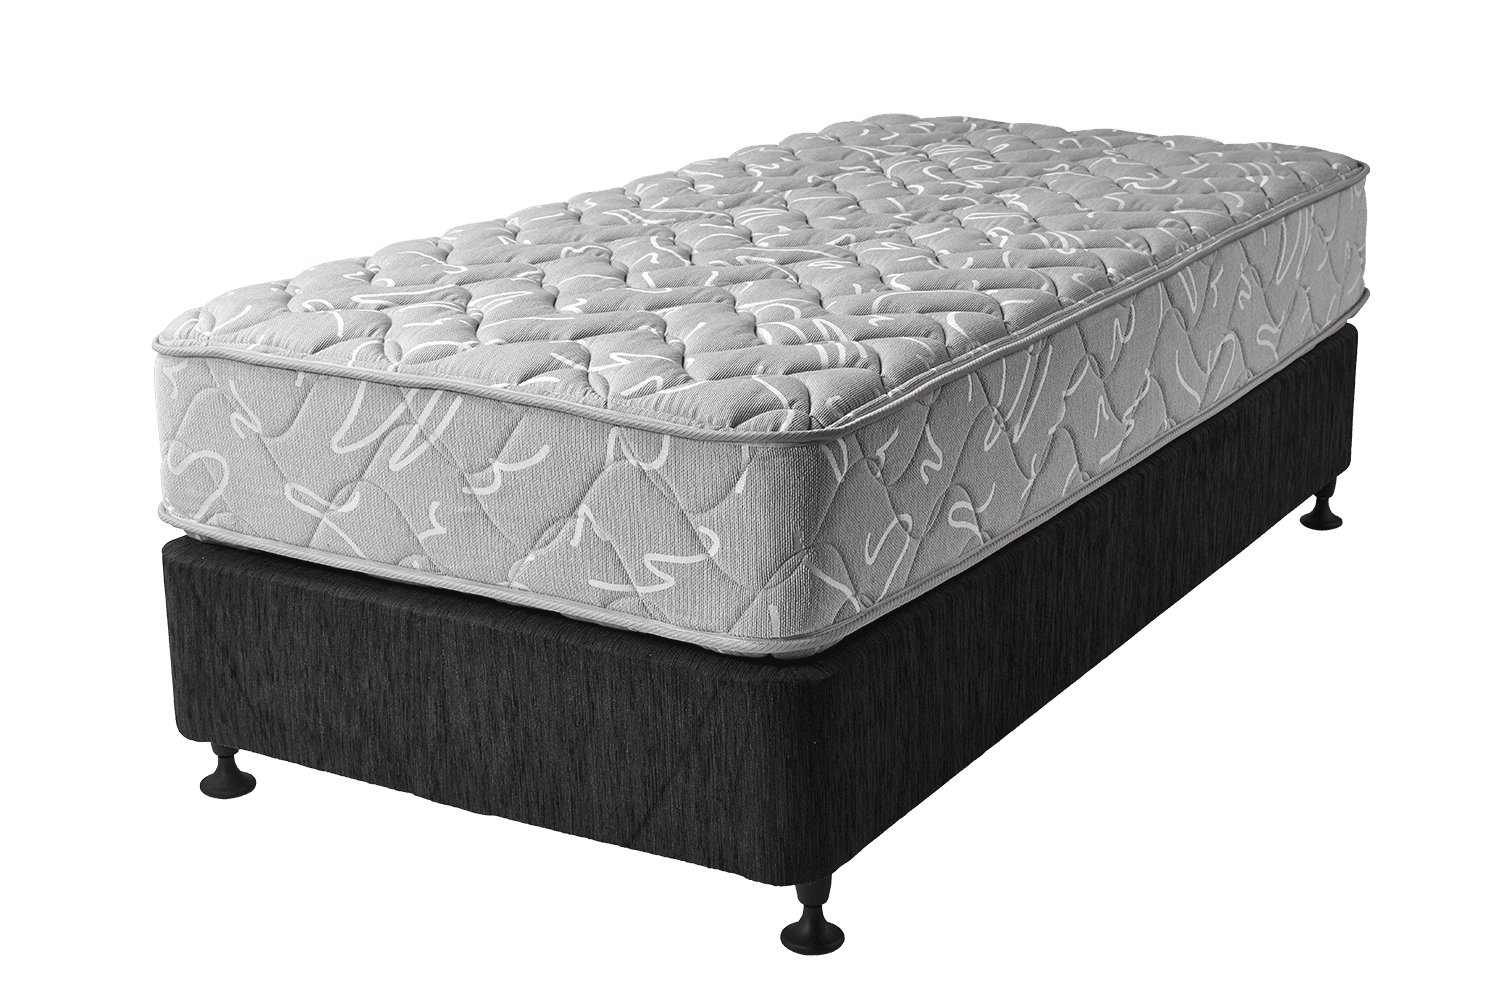 mattresses that i can finance